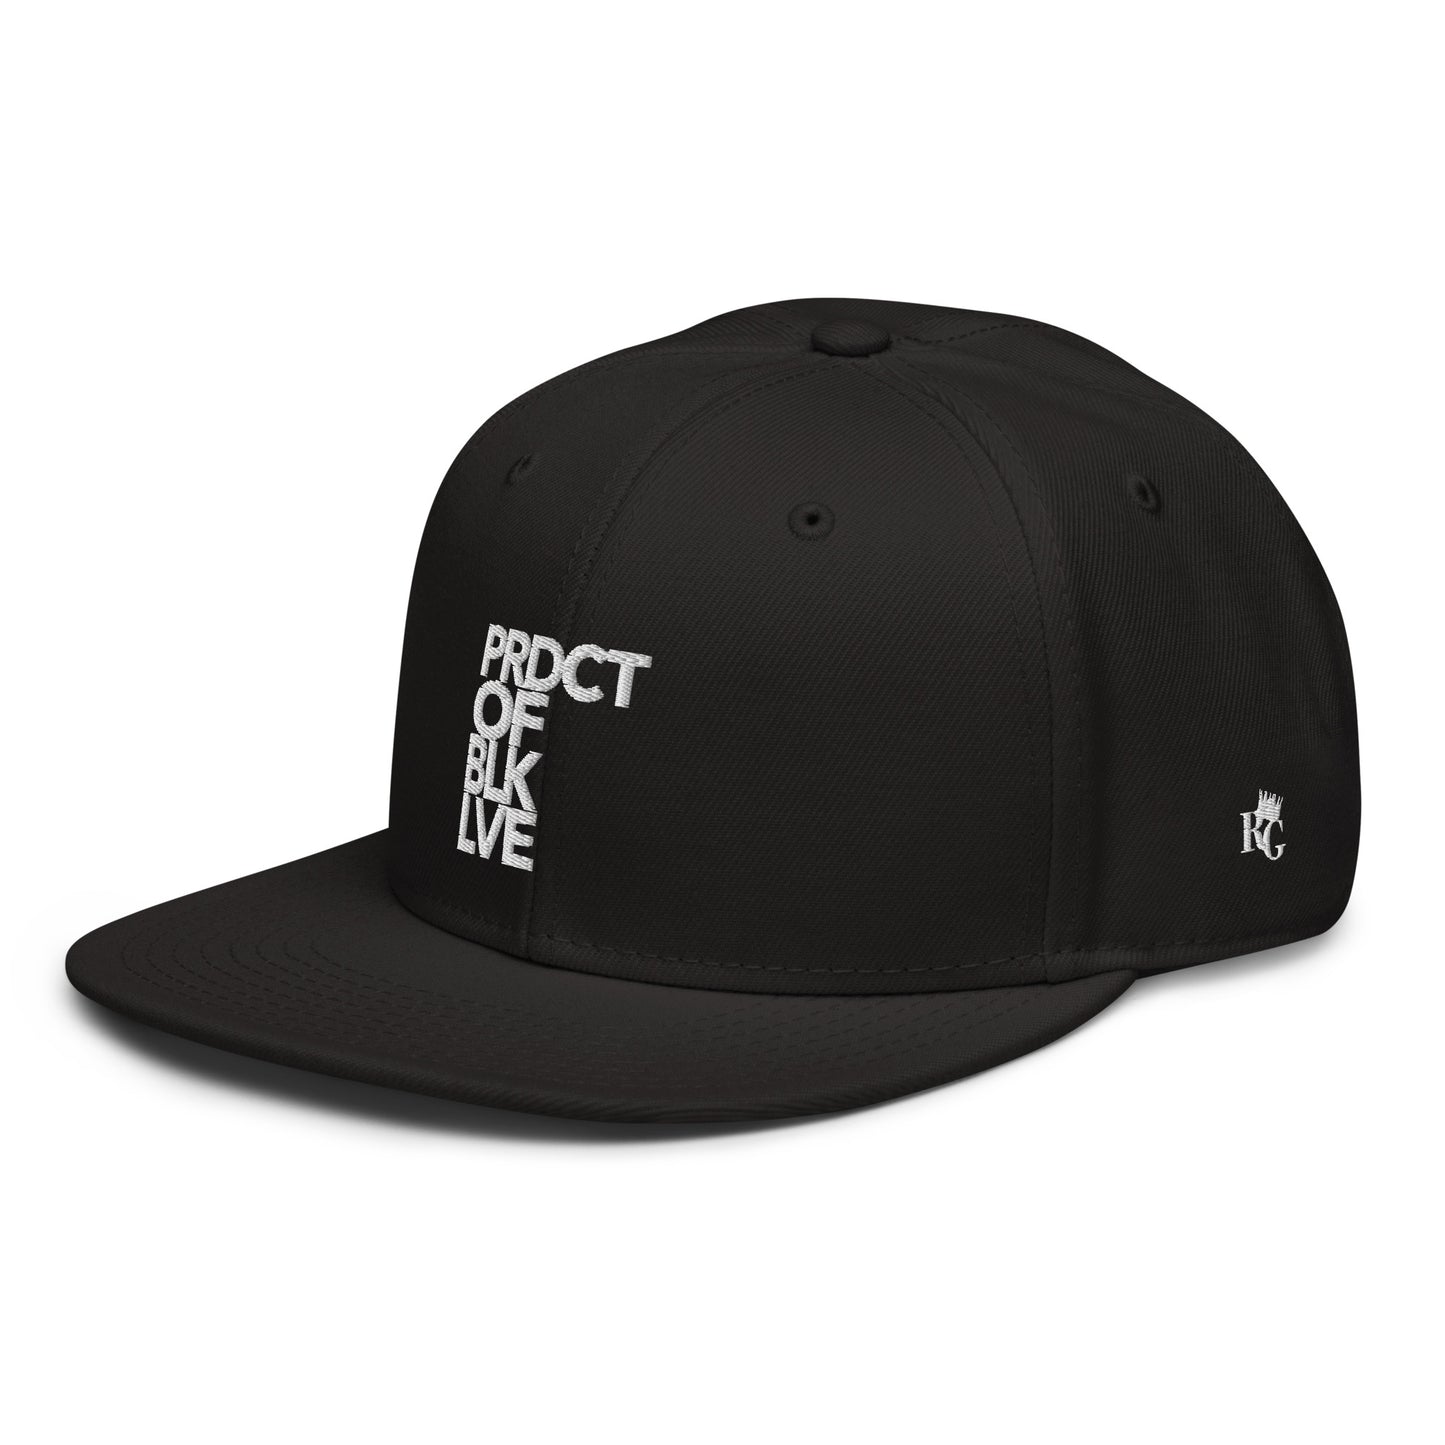 "Product of Black Love" Snapback Hat